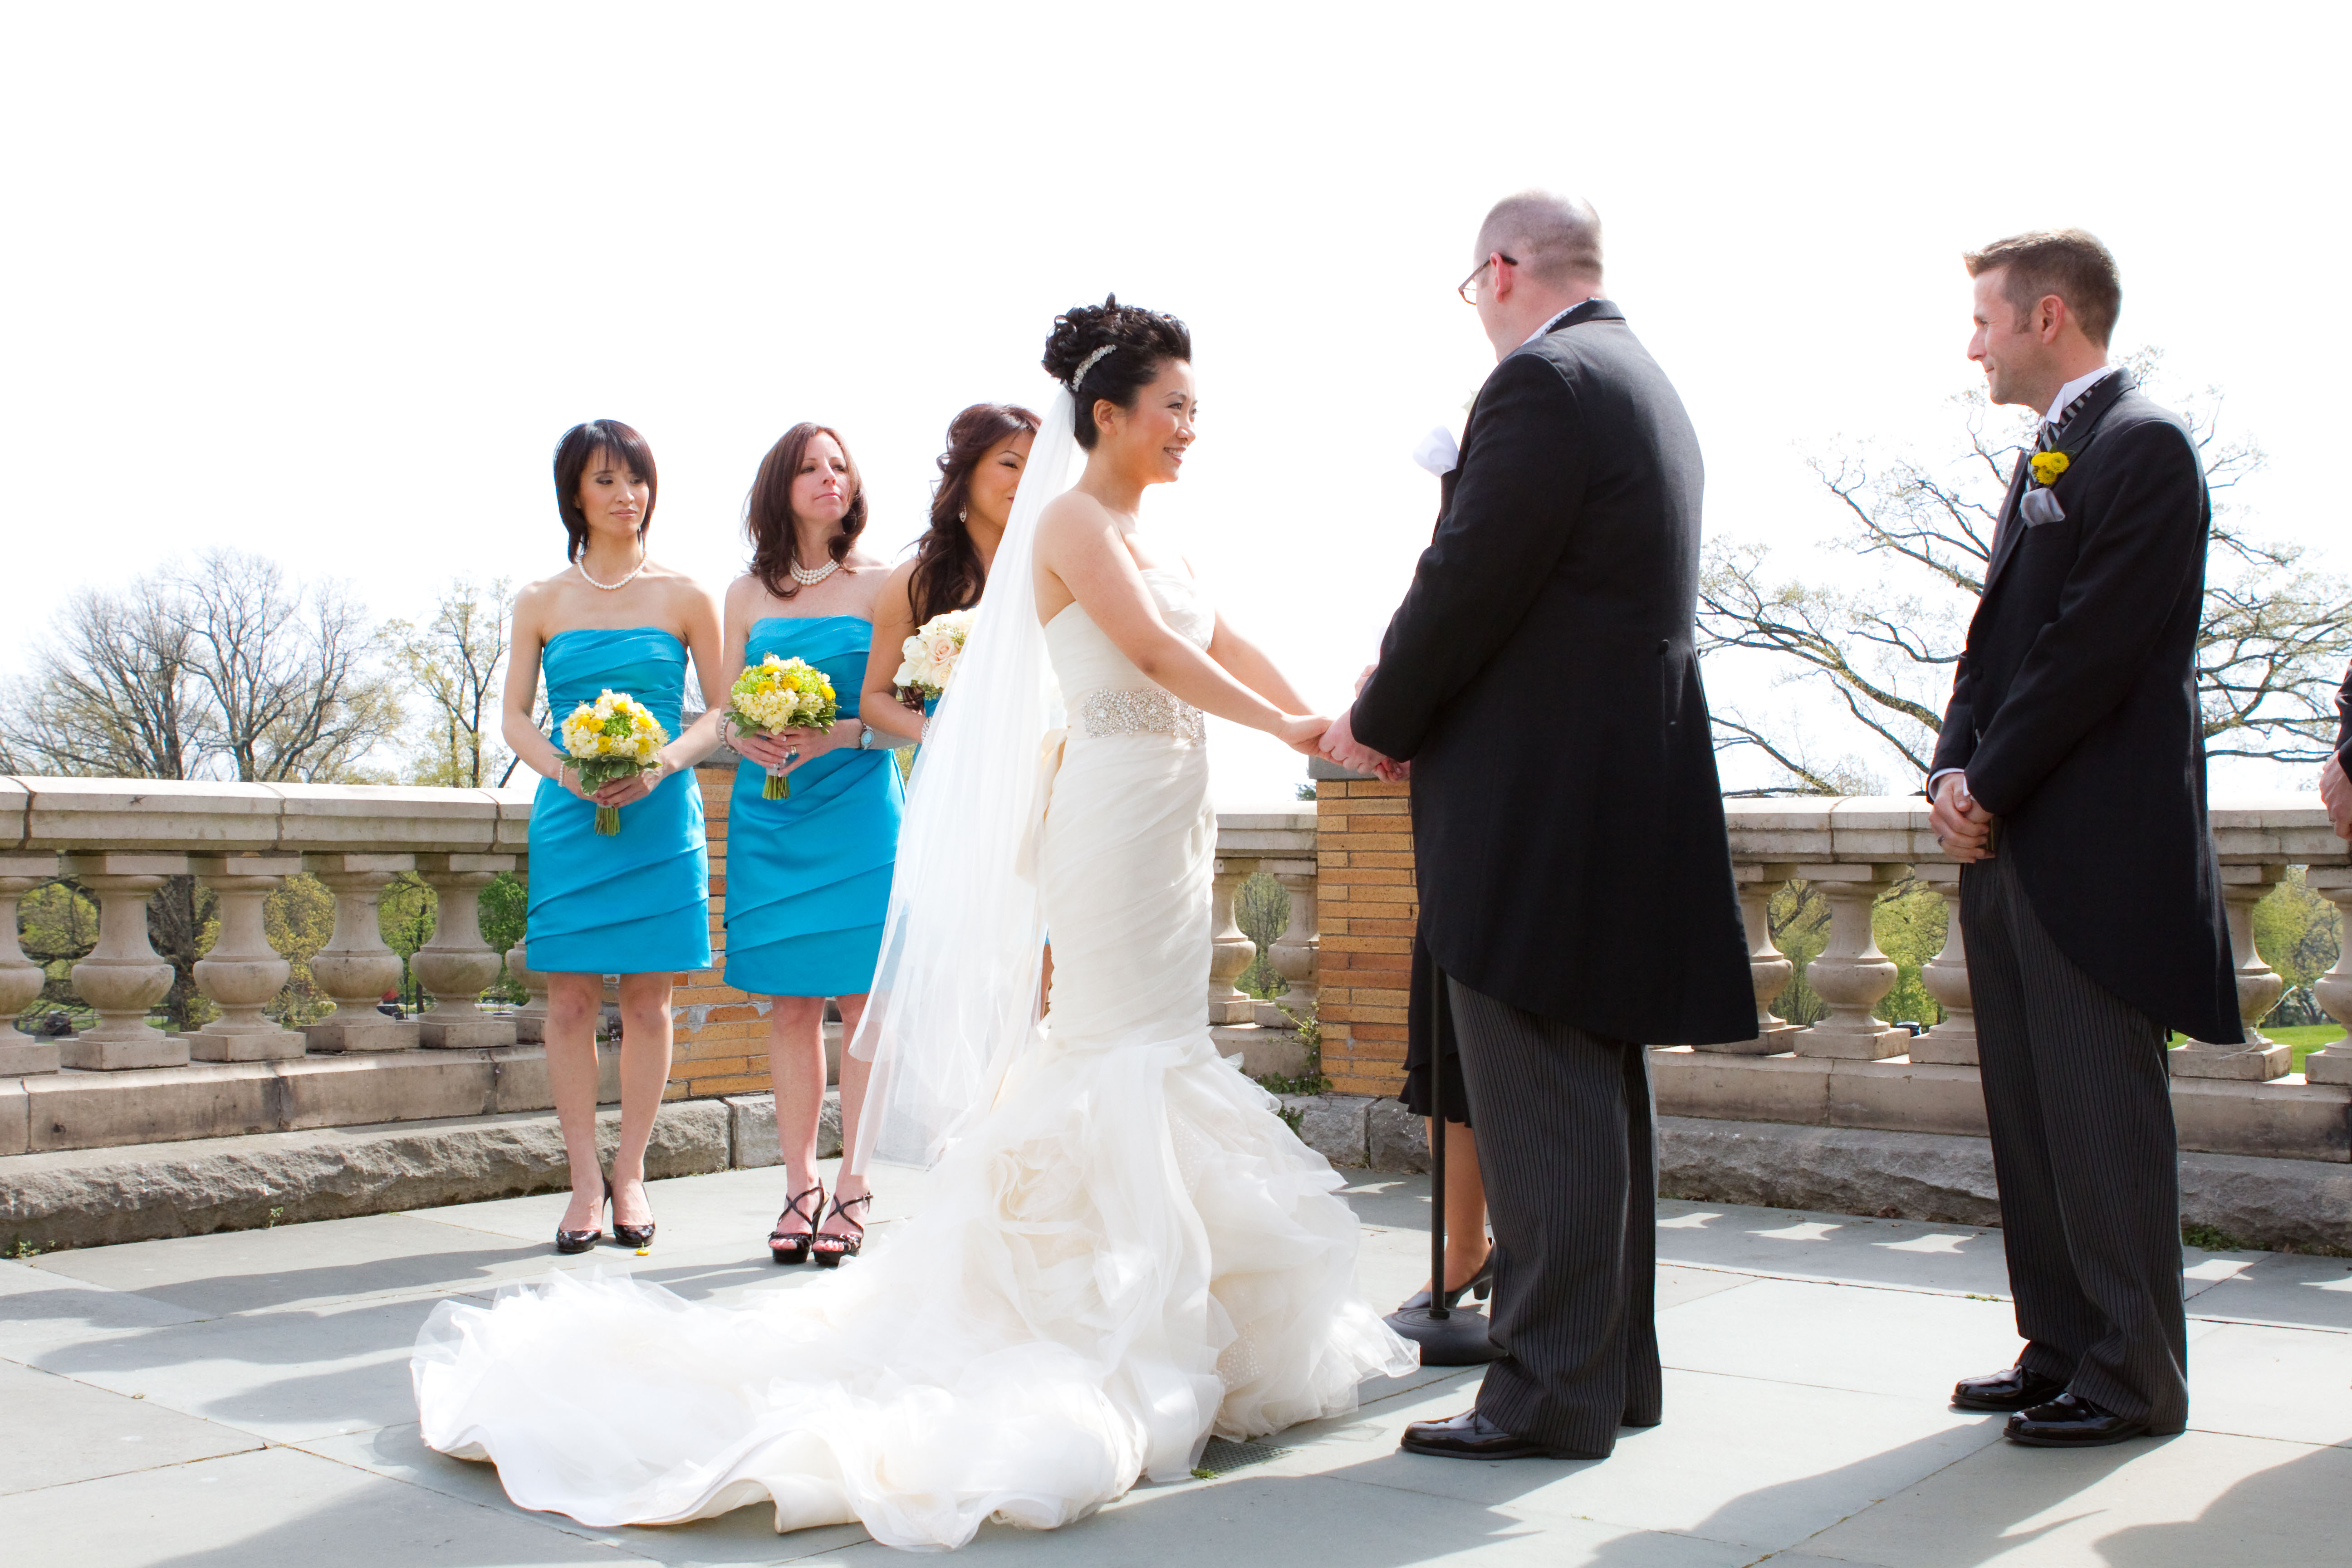 Top Spots For Bridesmaids Dresses In The Philadelphia Area Cbs